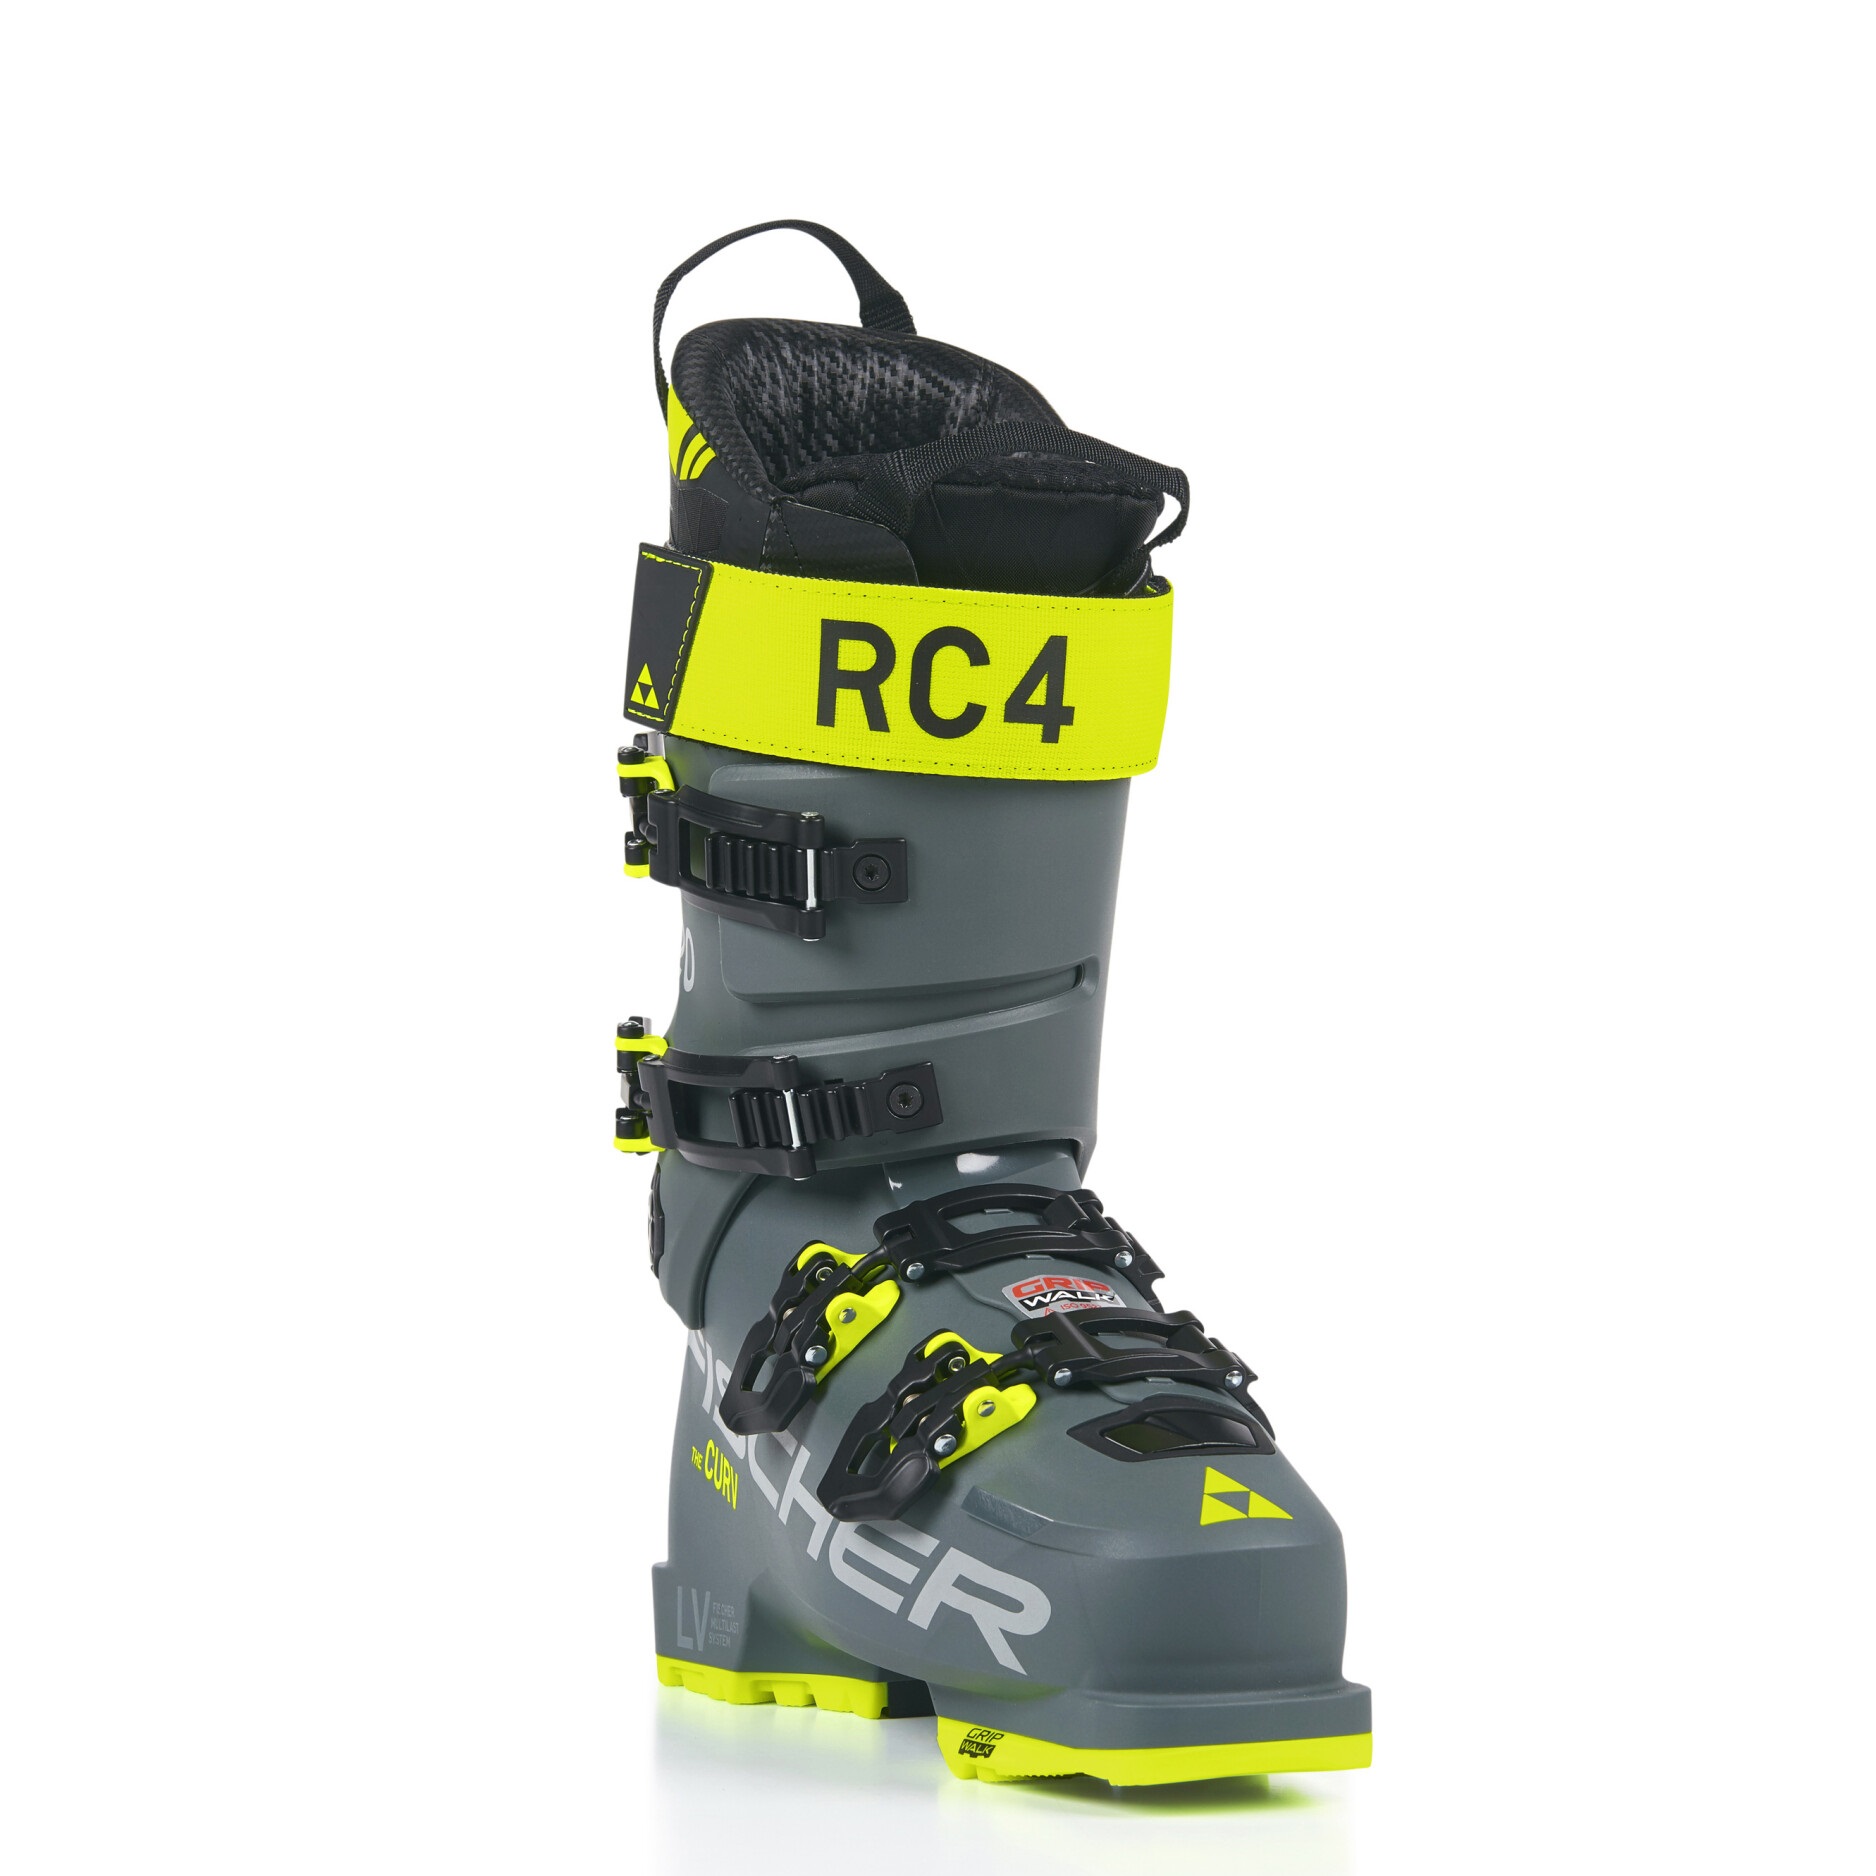 Ski Boots -  fischer The CURV GT 120 VAC GW